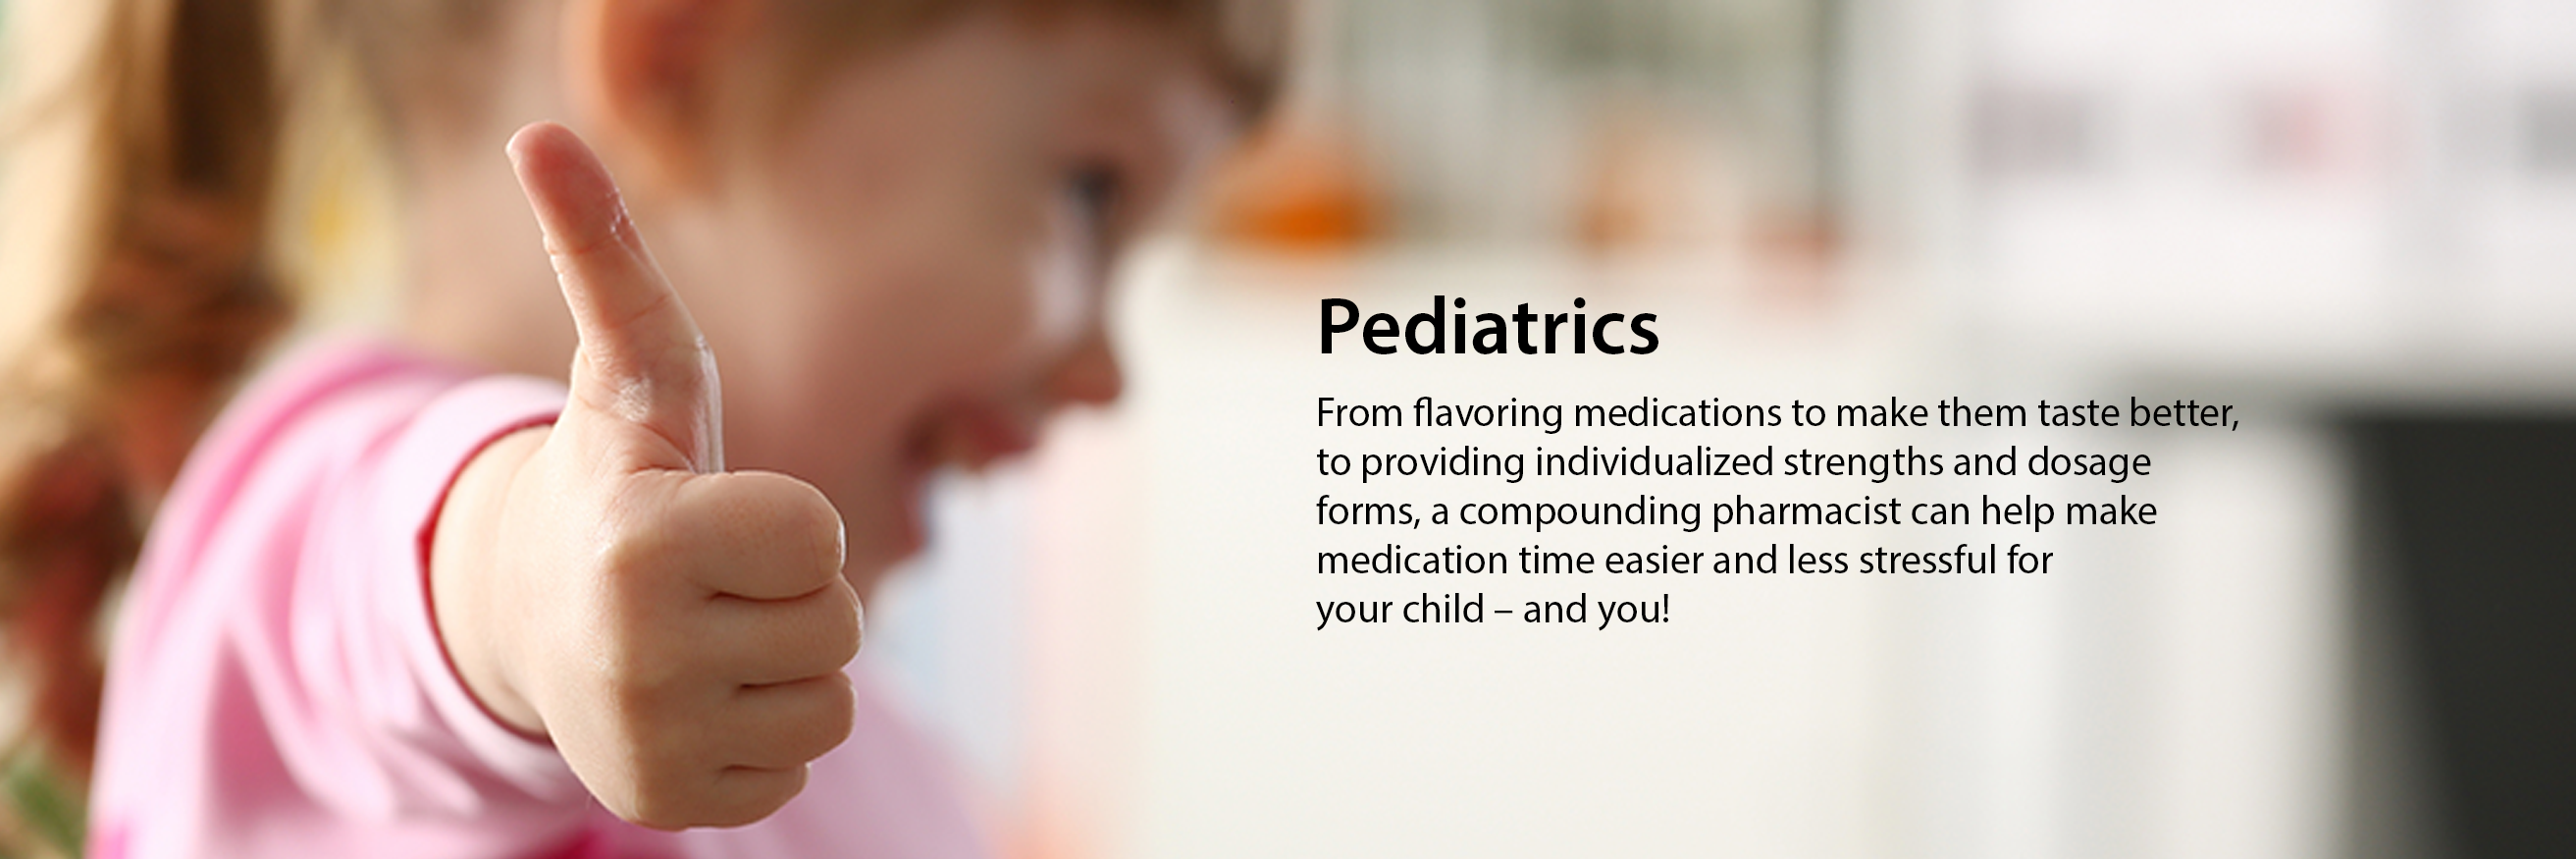 Pediatrics.png